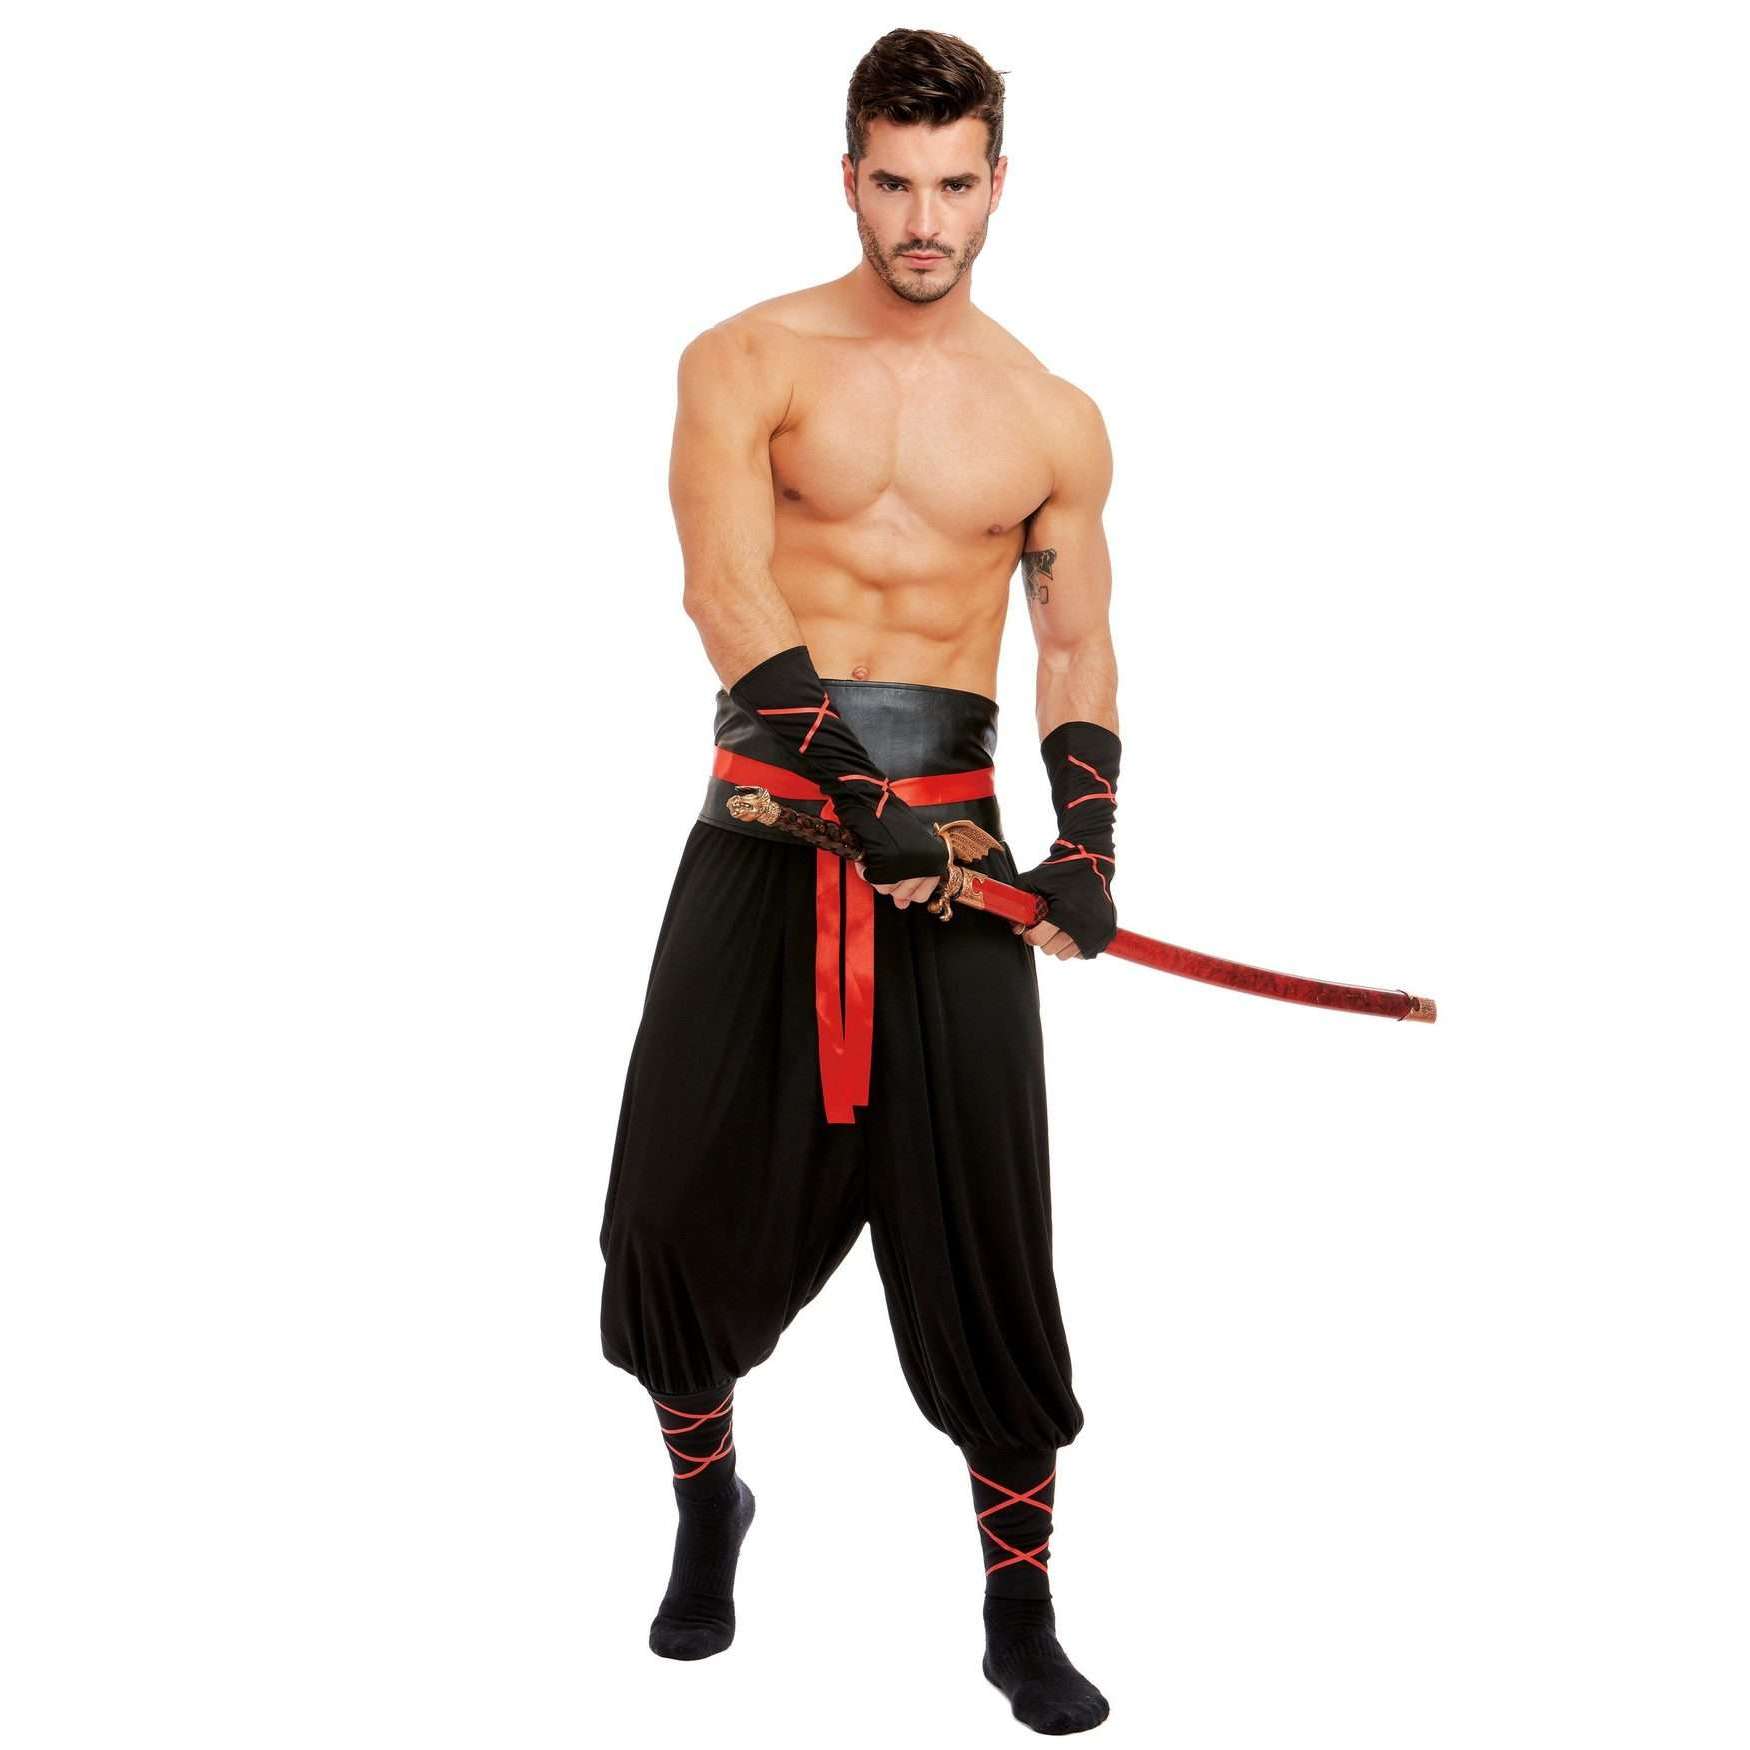 Red Dragon Ninja Adult Costume